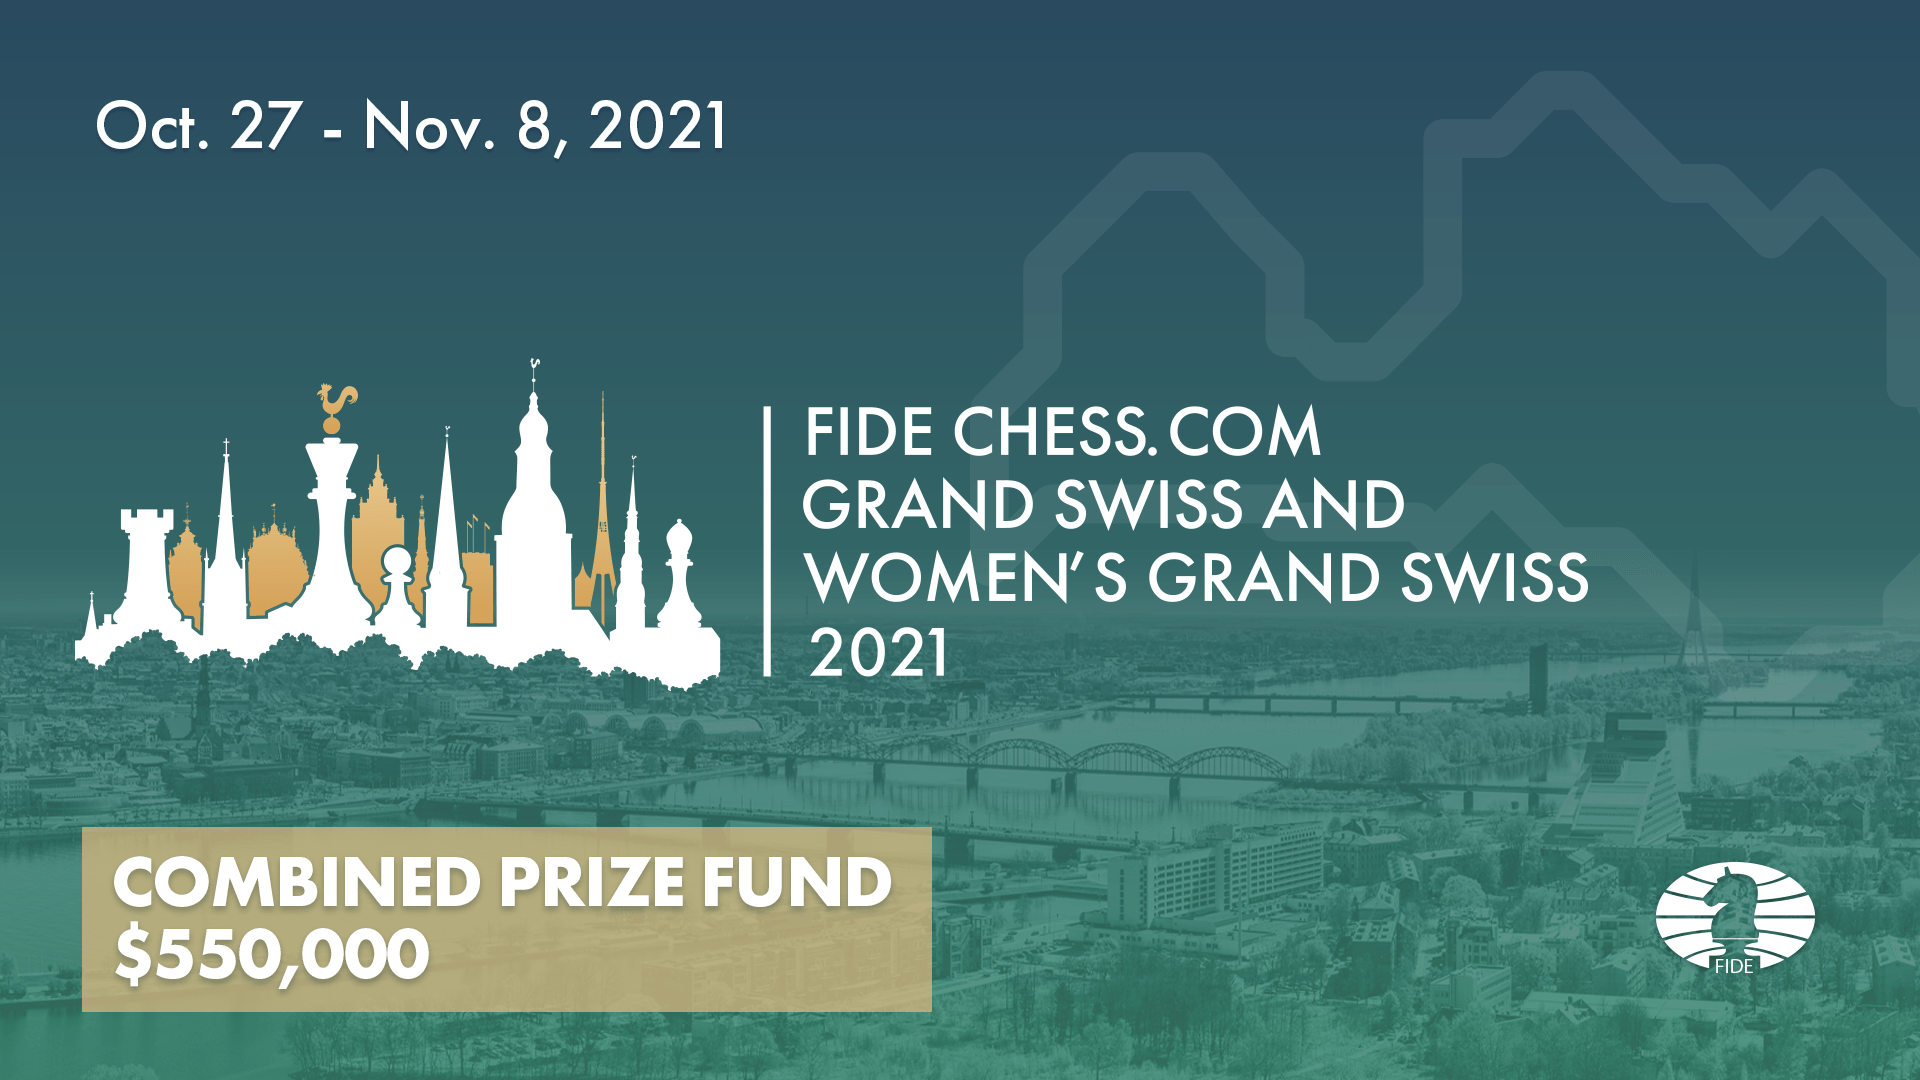 FIDE Chess.com Grand Swiss: visa informācija